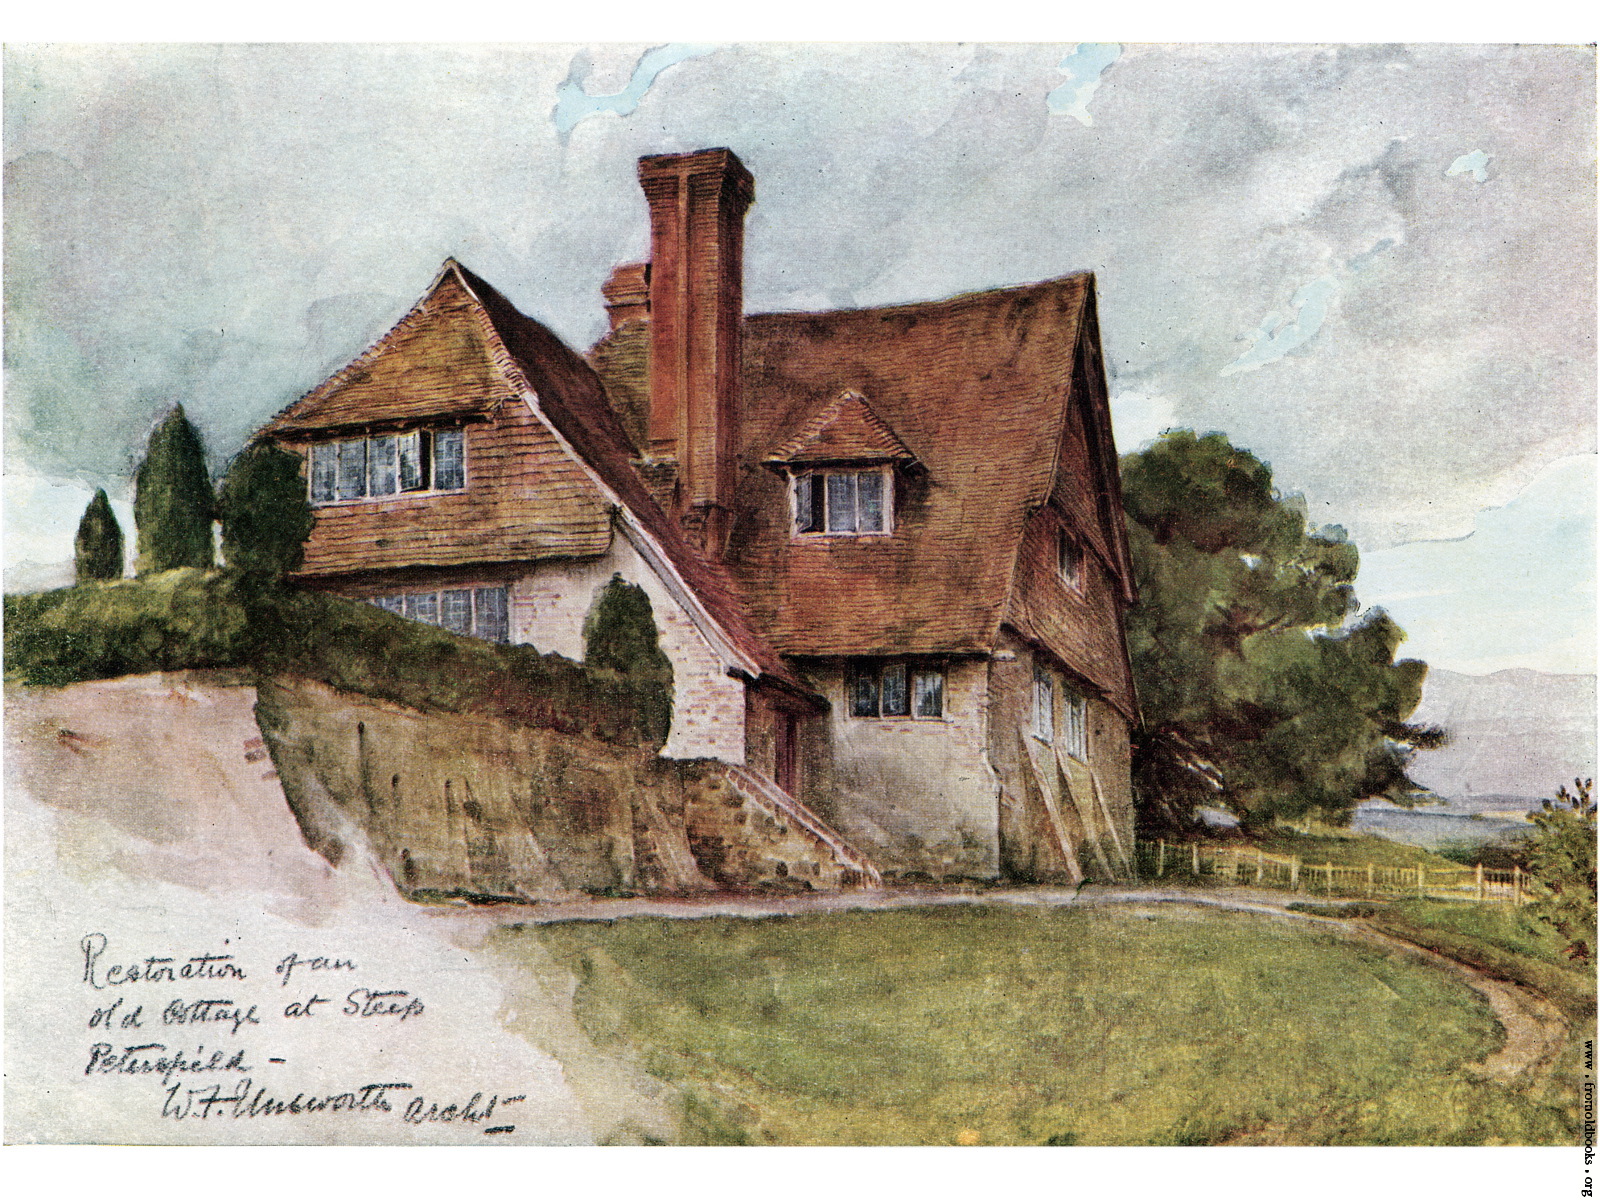 Restoration of Old Cottage at Steep Petersfield